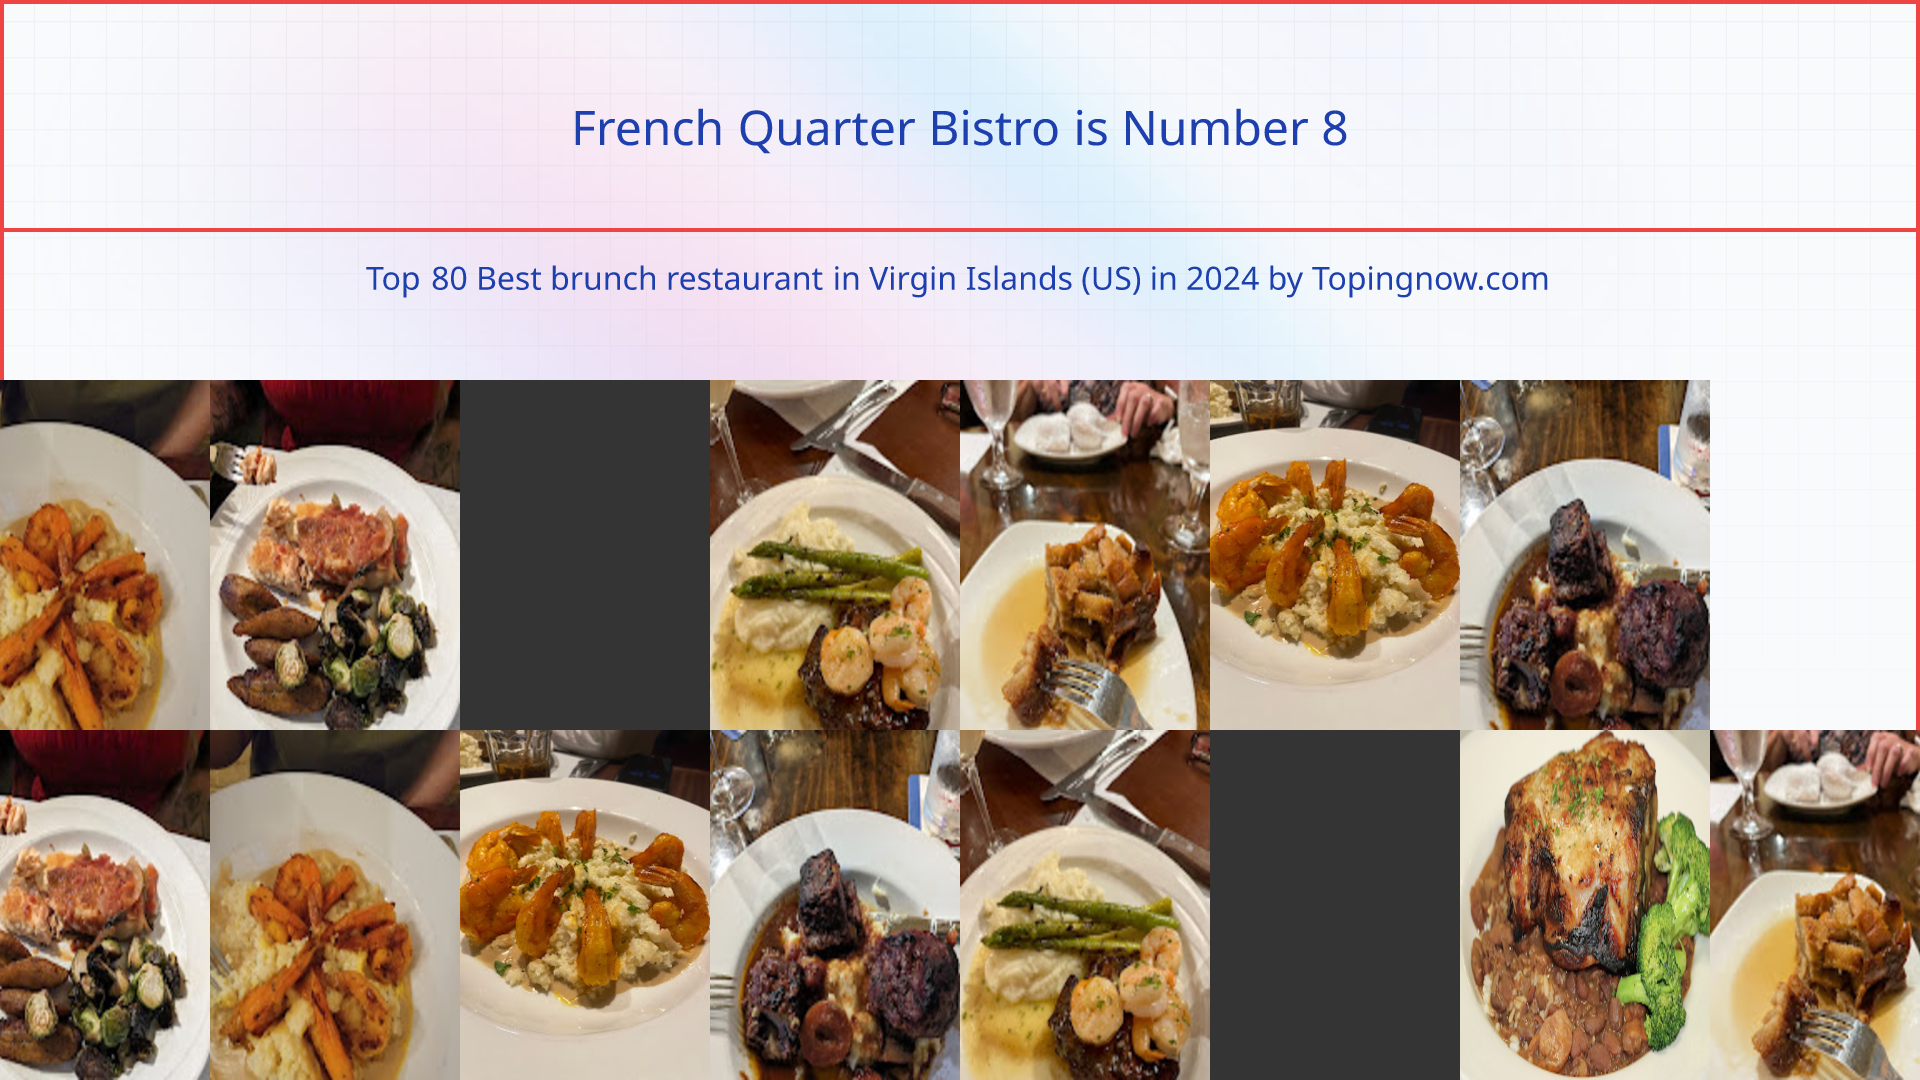 French Quarter Bistro: Top 80 Best brunch restaurant in Virgin Islands (US) in 2024